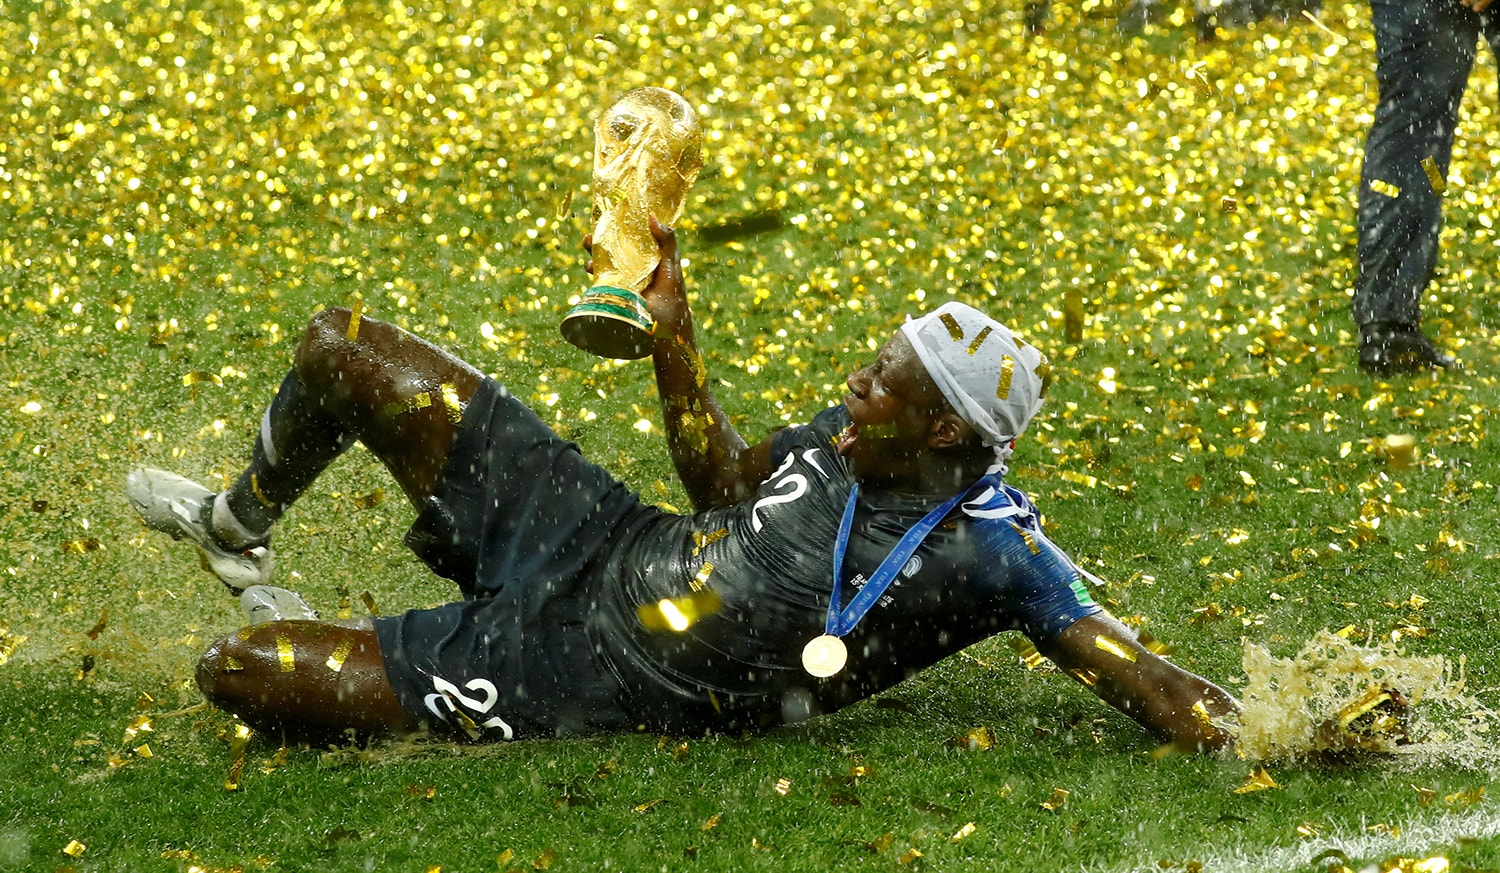  Benjamin Mendy comemora a vit&oacute;ria da sele&ccedil;&atilde;o francesa no Mundial de Futebol /Kai Pfaffenbach - Reuters 